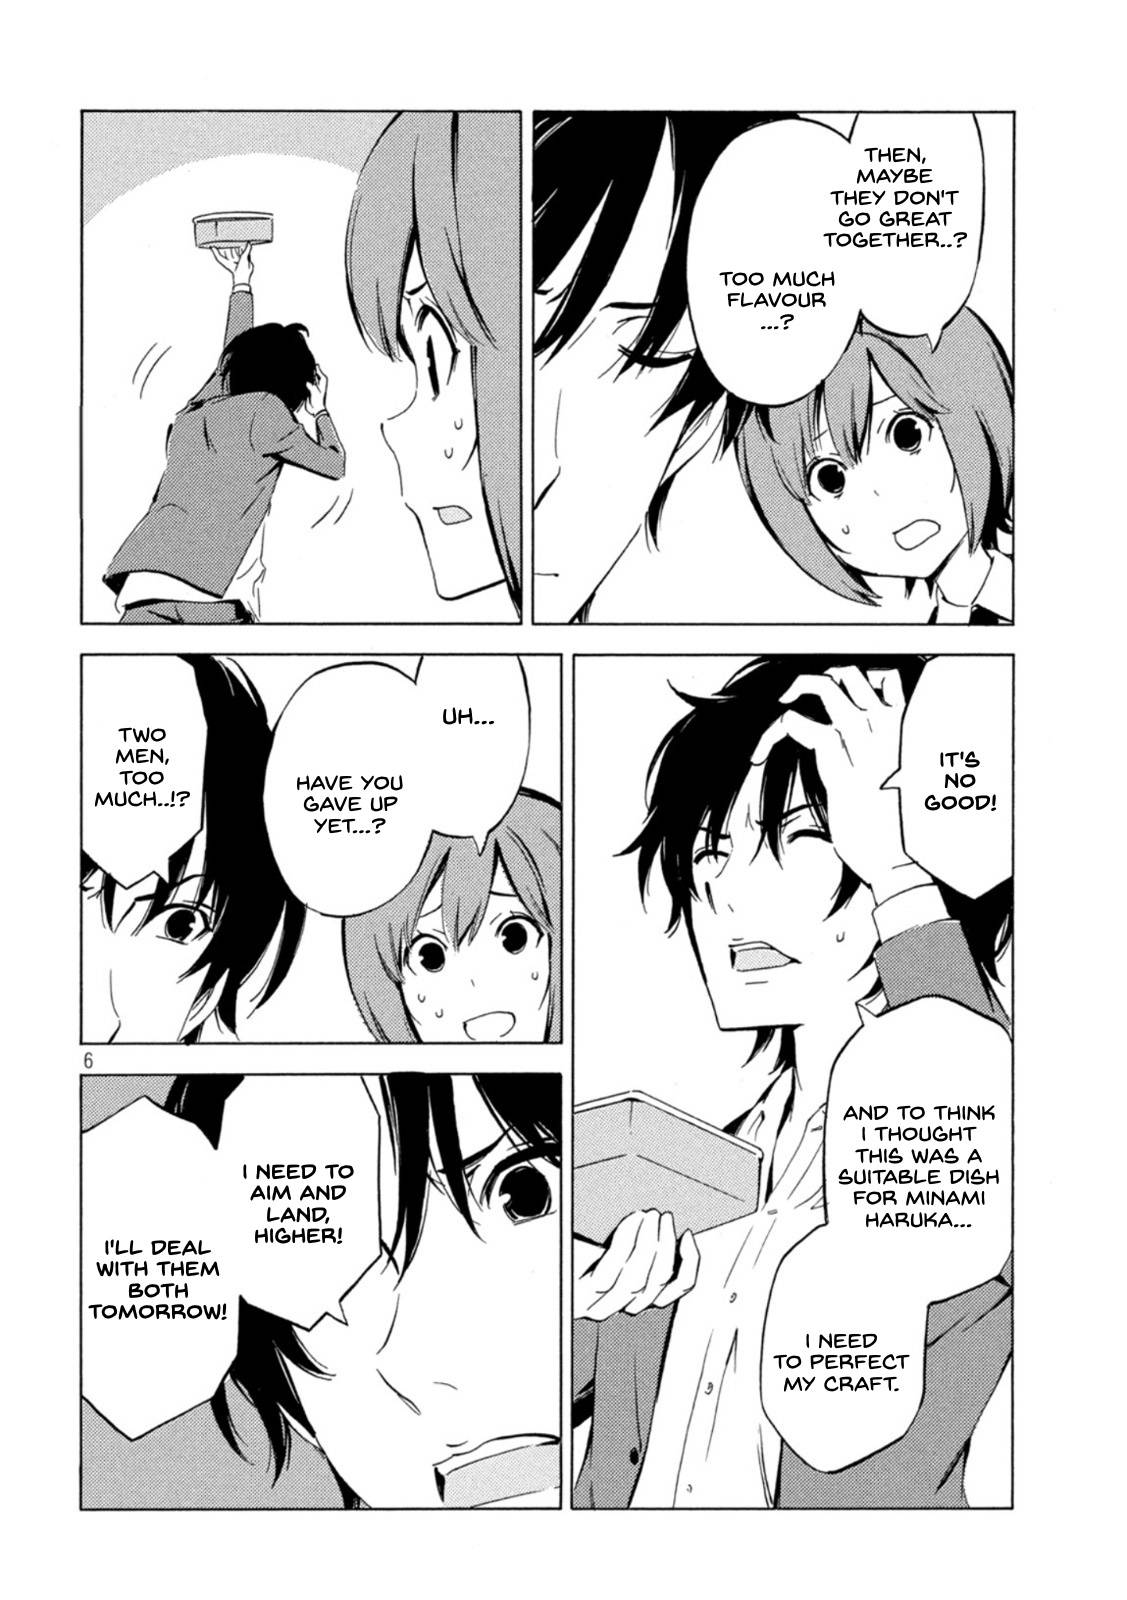 Minami-ke chapter 446 page 6